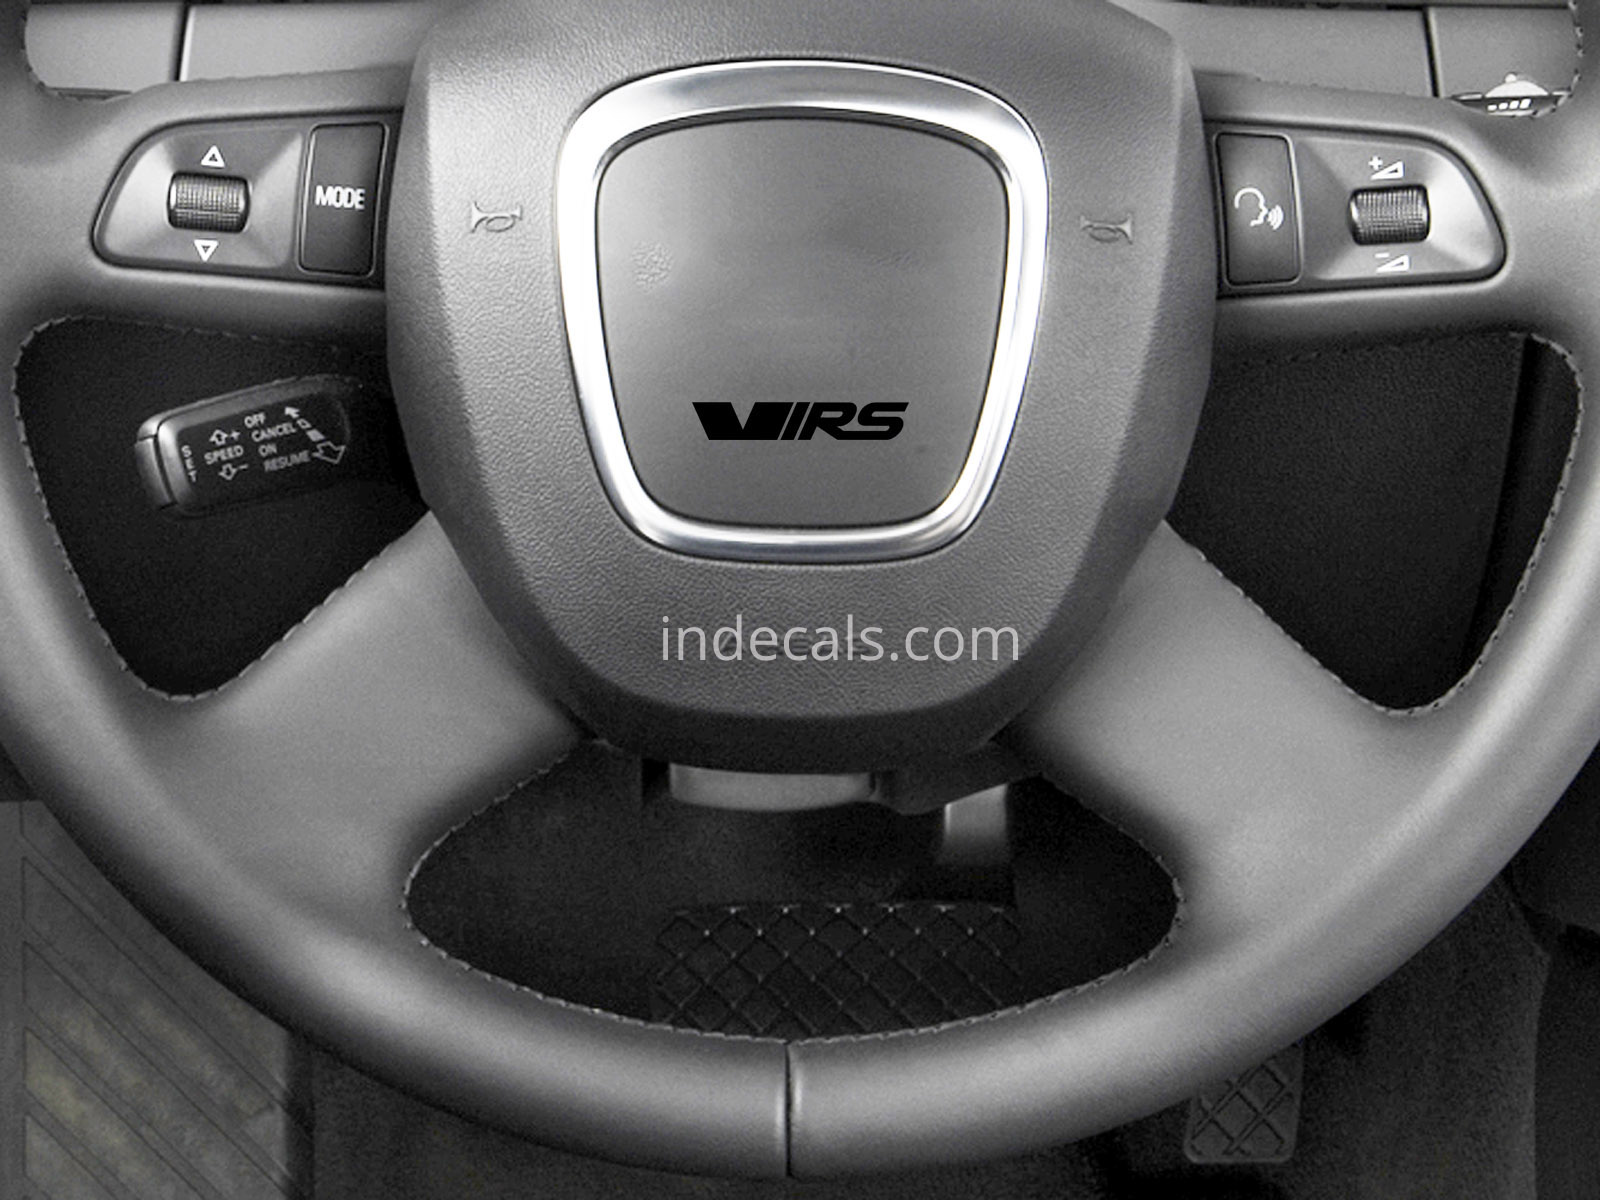 3 x Skoda RS Stickers for Steering Wheel - Black